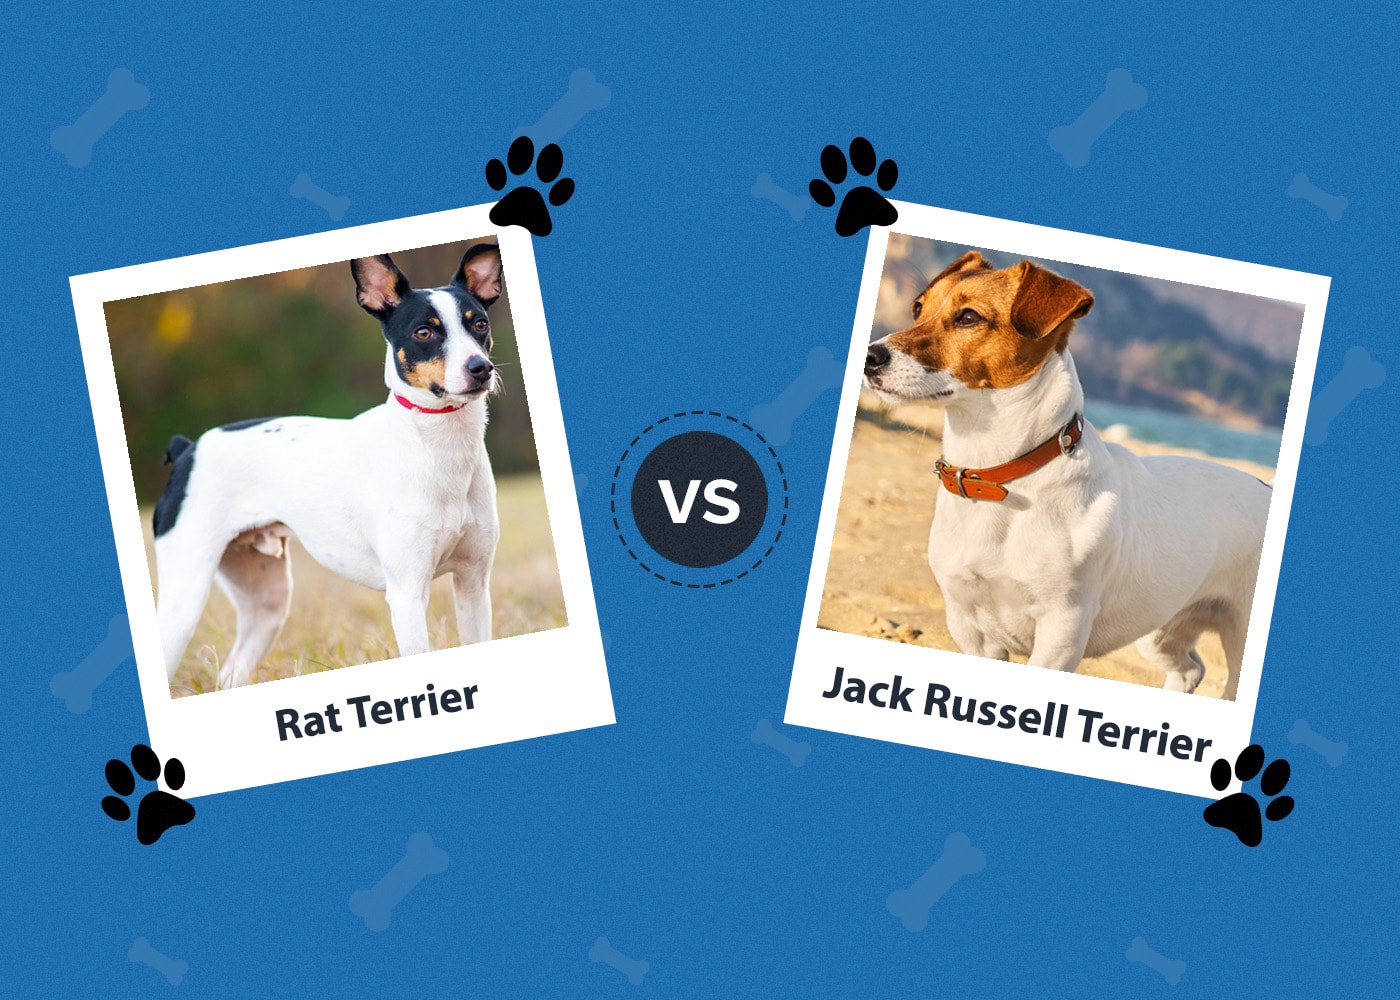 Rat Terrier vs. Jack Russell Terrier